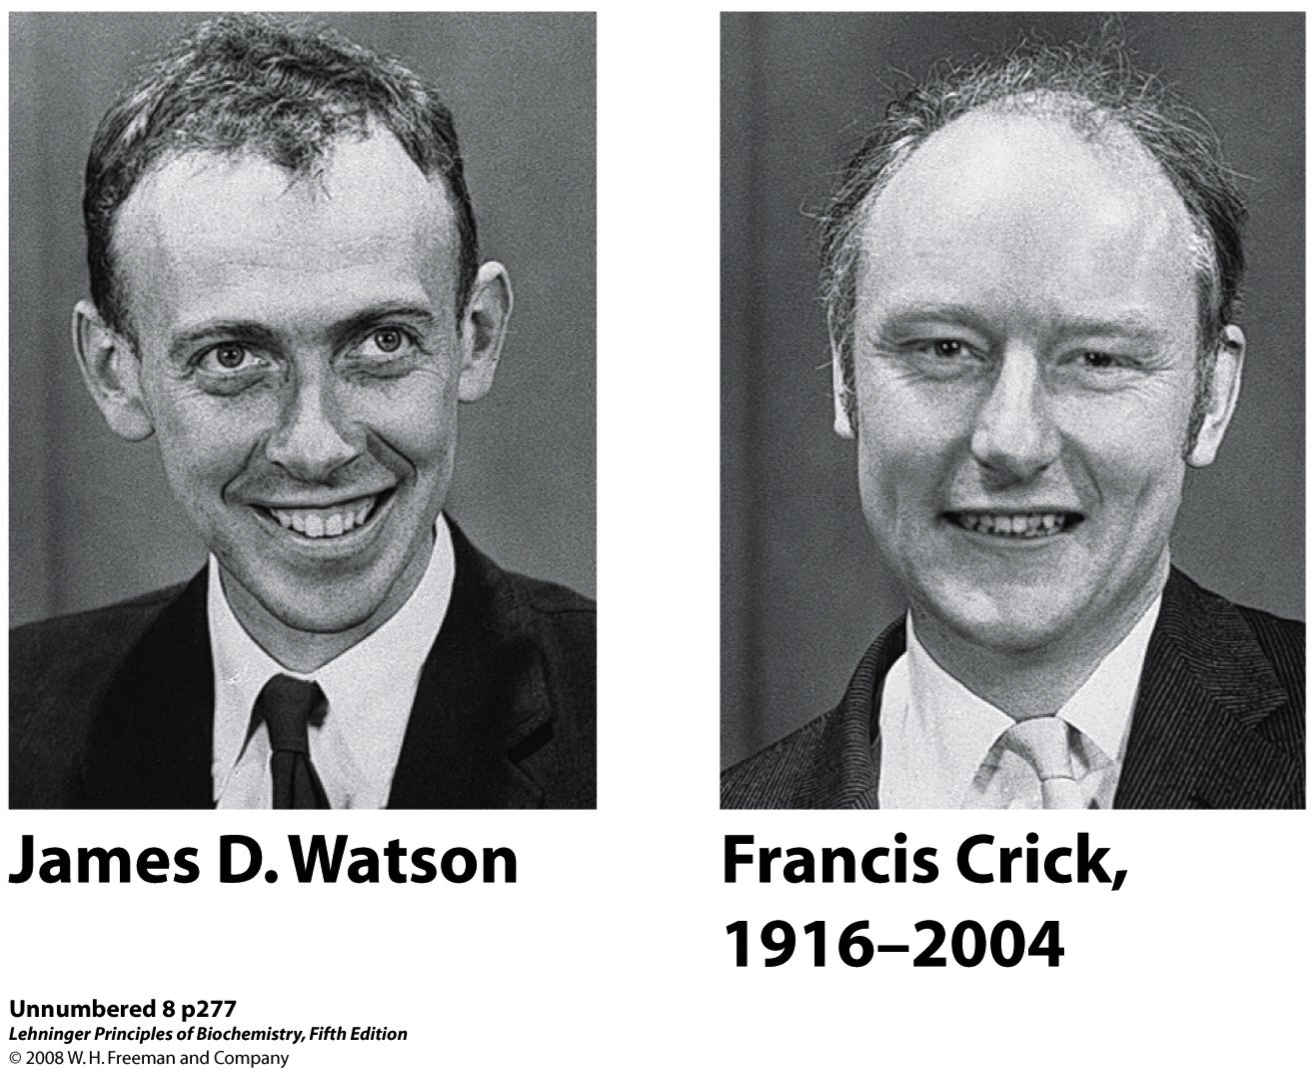 Дж крик. Дж Уотсон и ф крик. 1953 Уотсон и крик. Дж Уотсон ДНК.